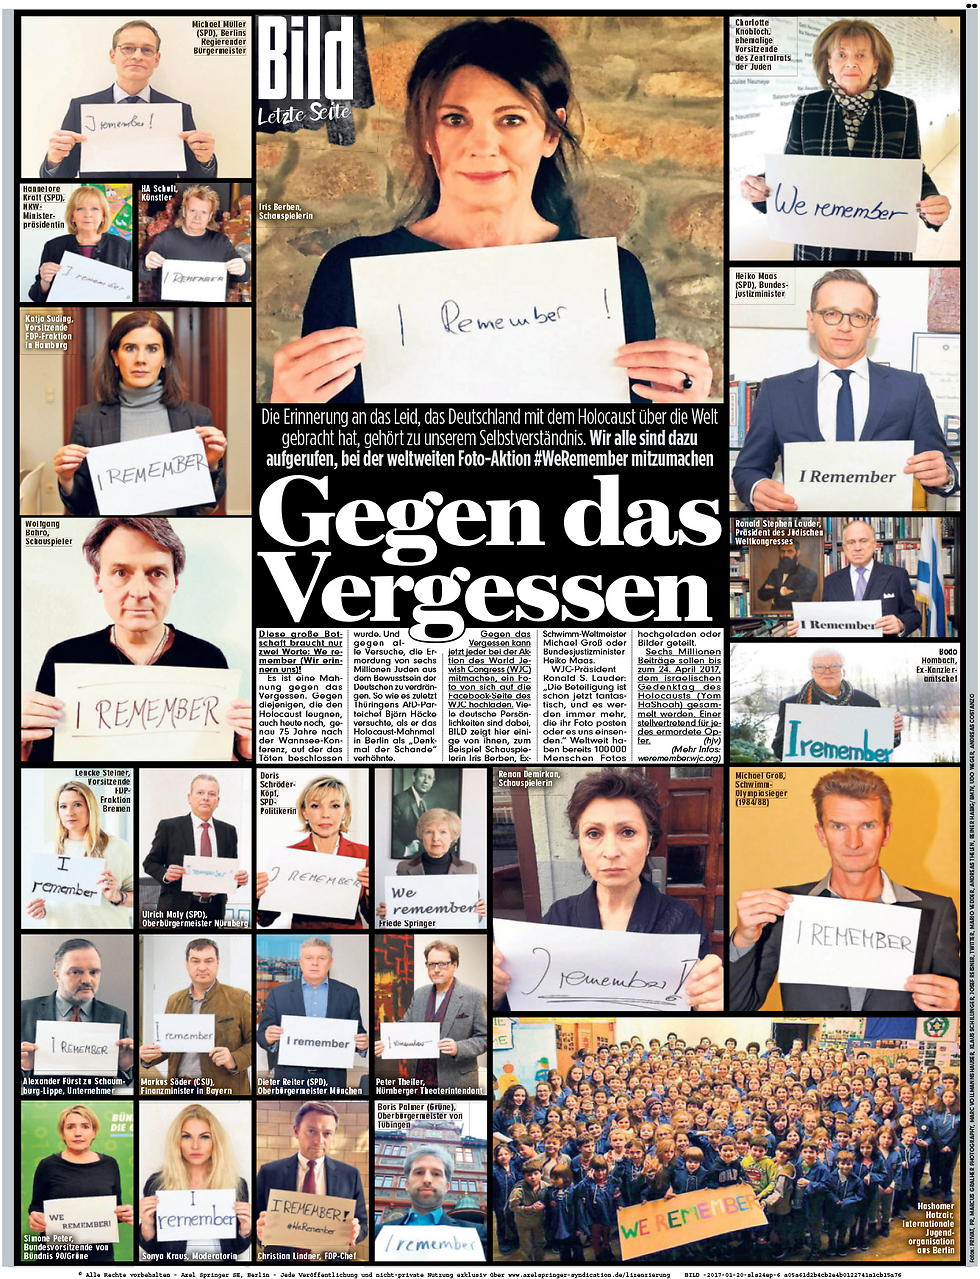 Bild's article with famous Germans participating 